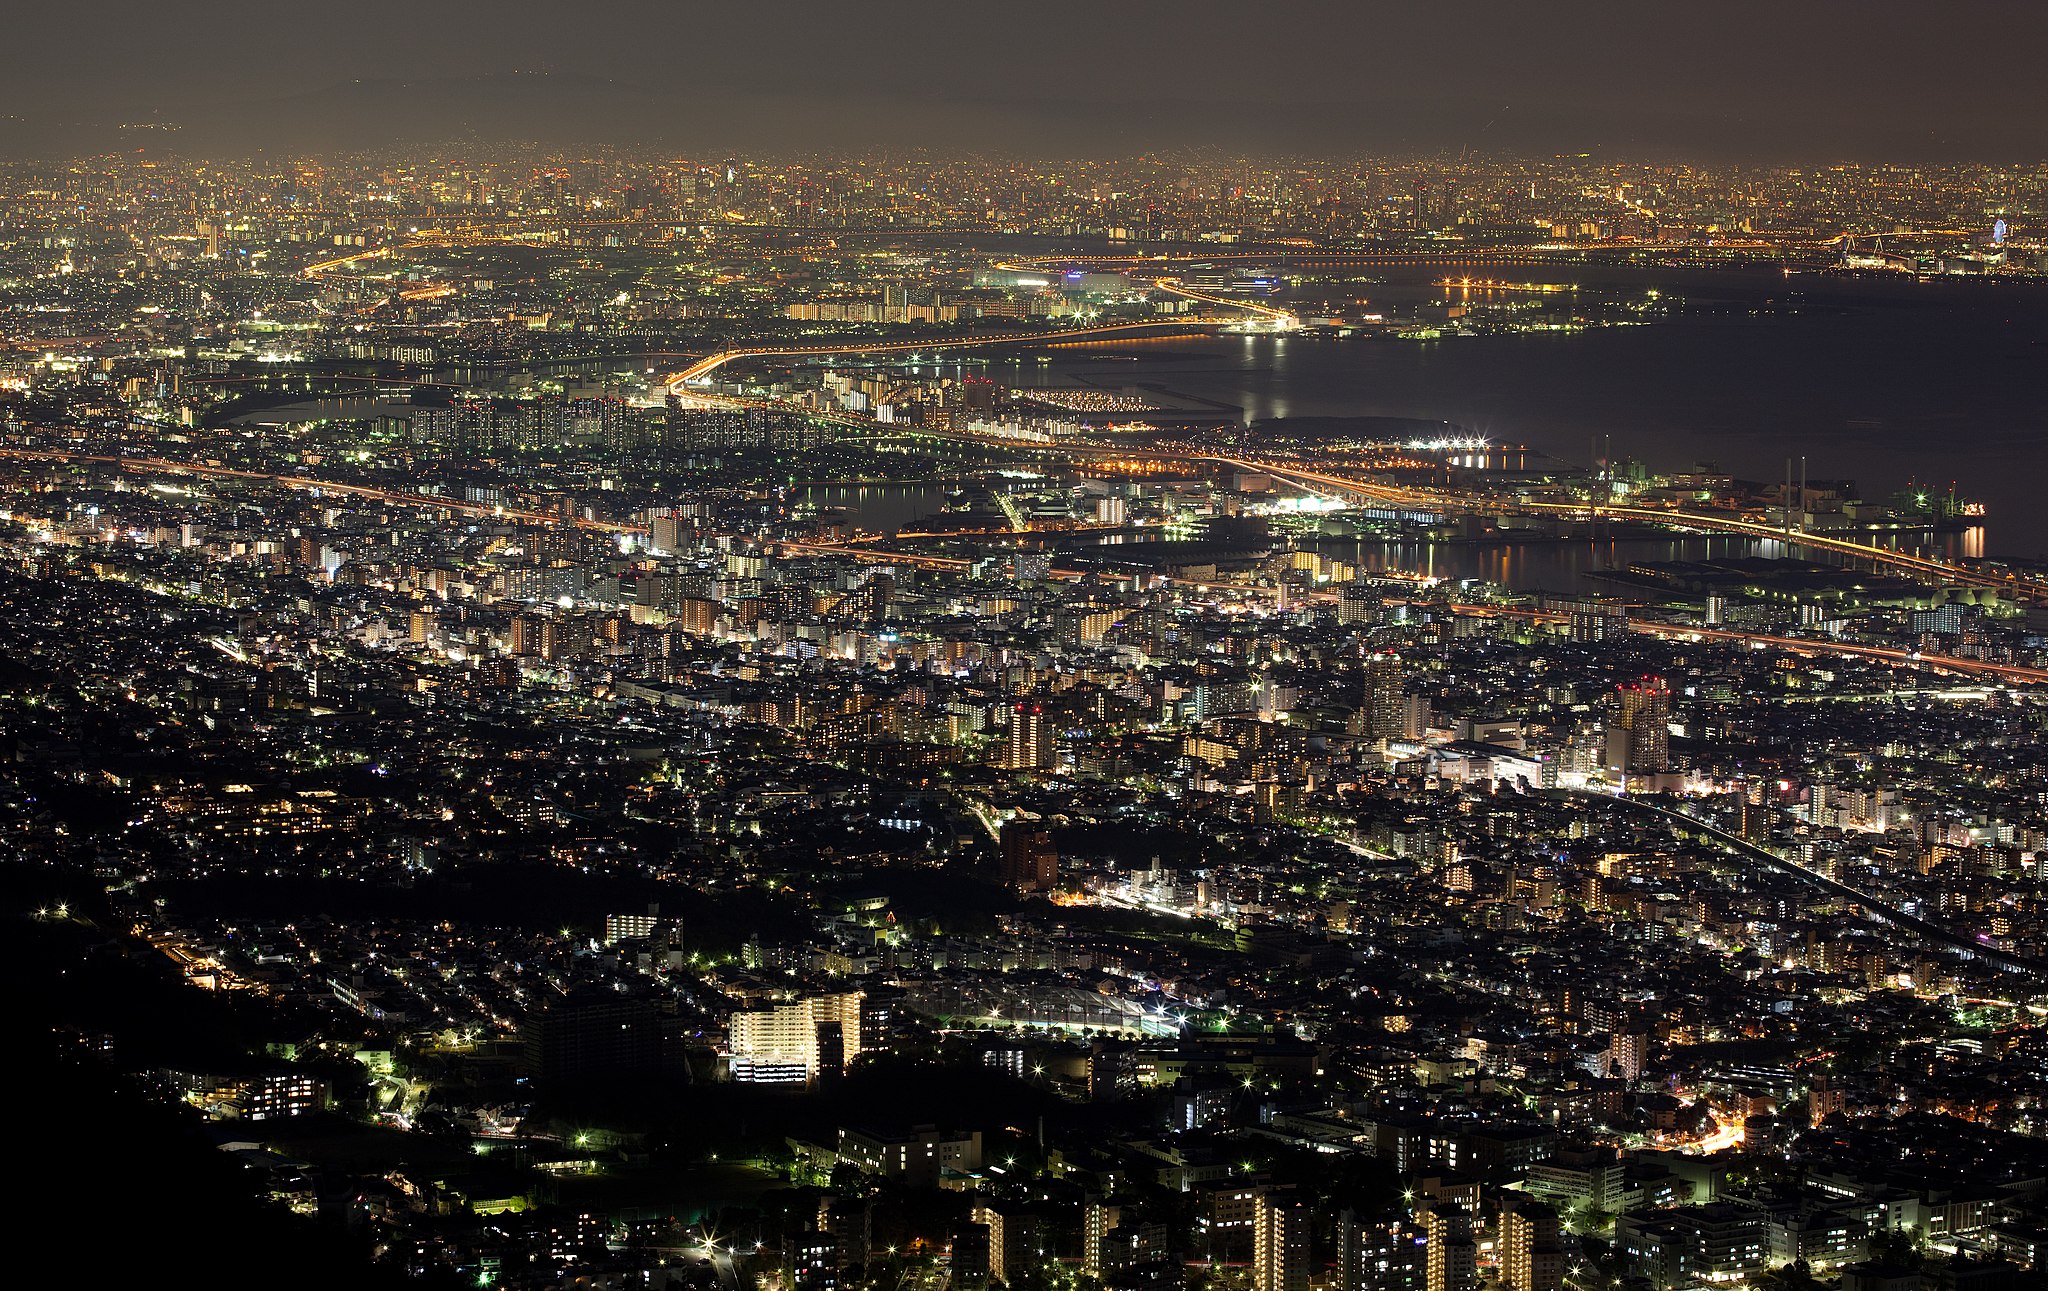 The famed ten million dollar view in Kobe